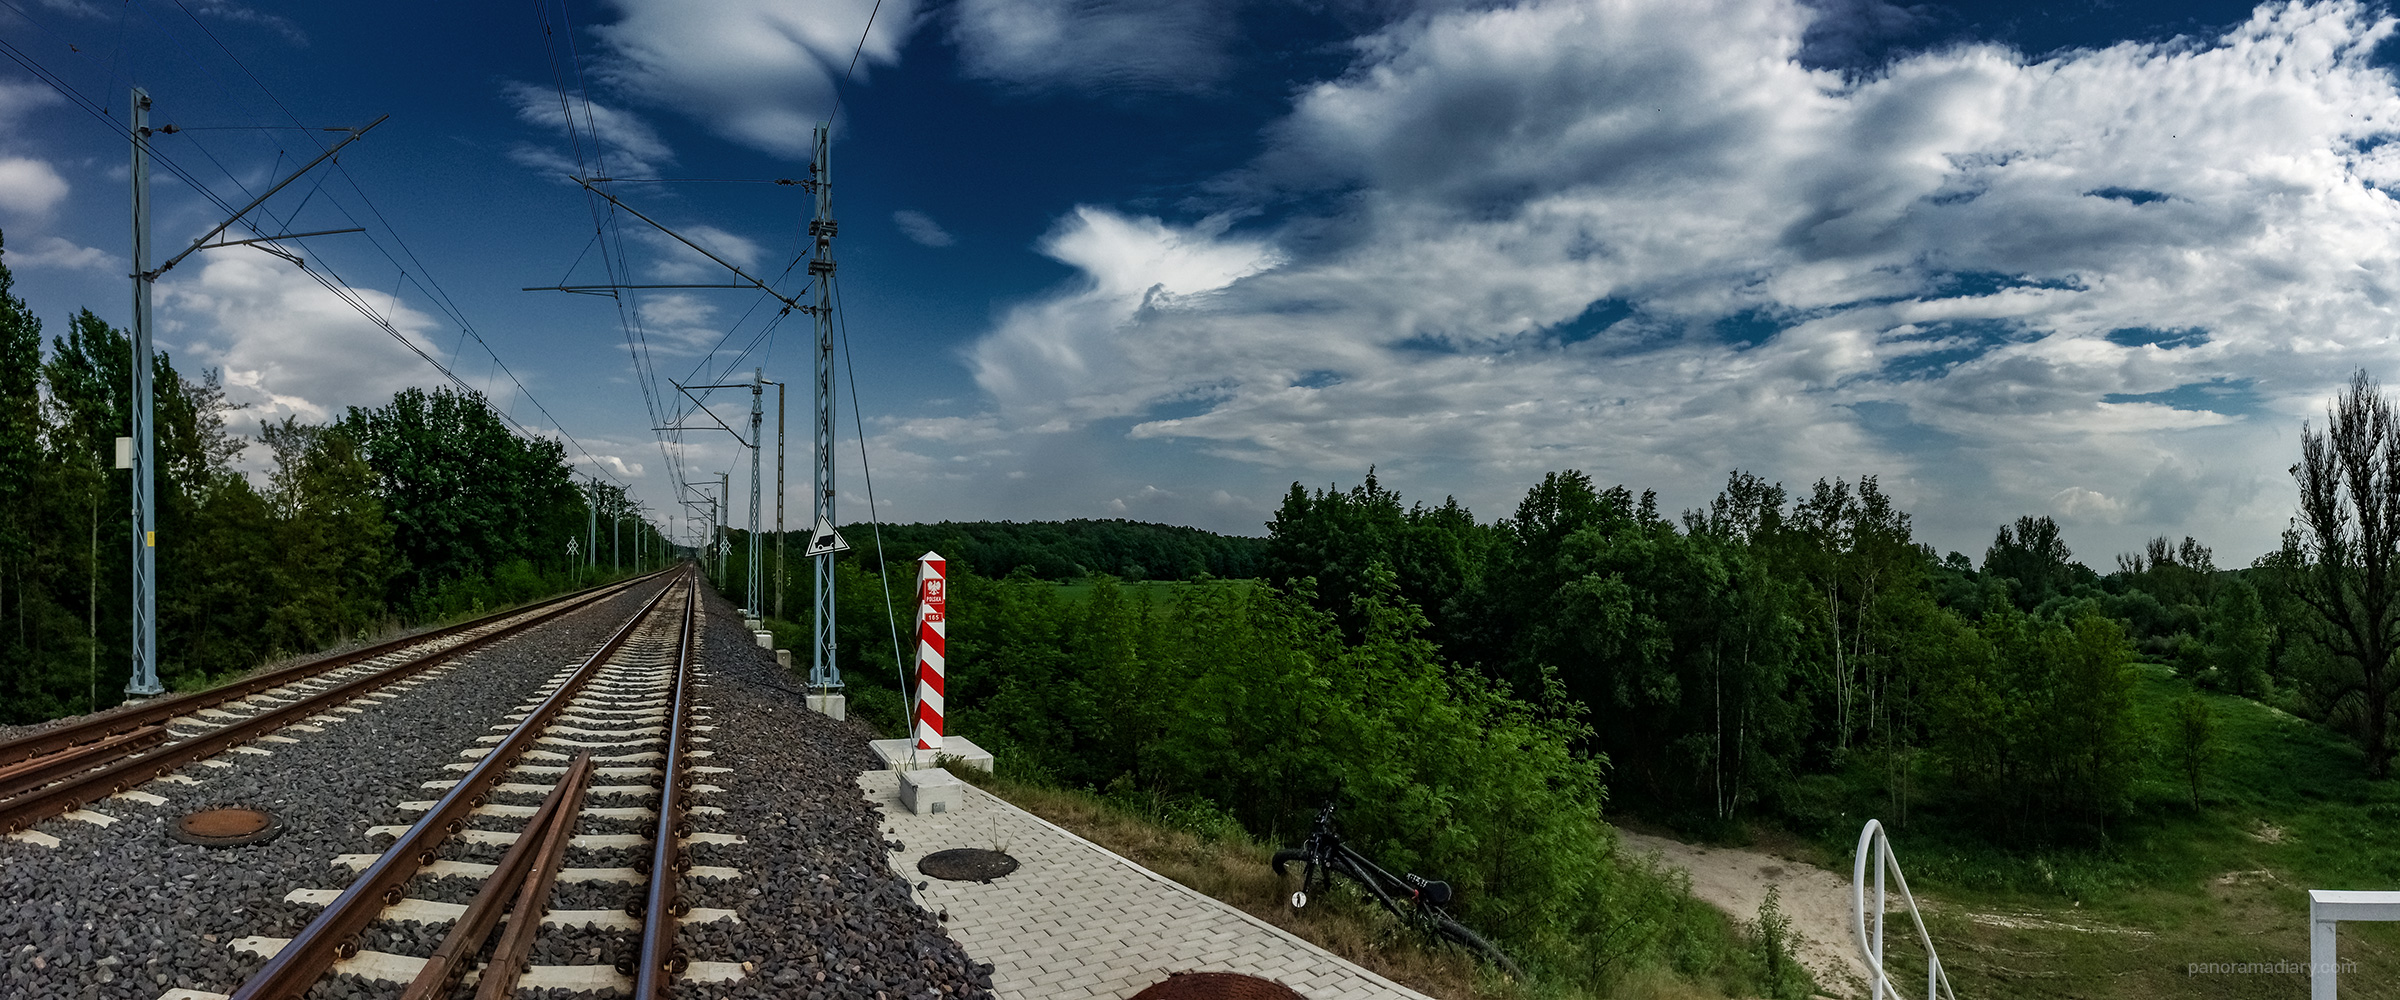 PANORAMA DIARY | Iphoneography blog | Polish-German railway border at Bielawa Dolna